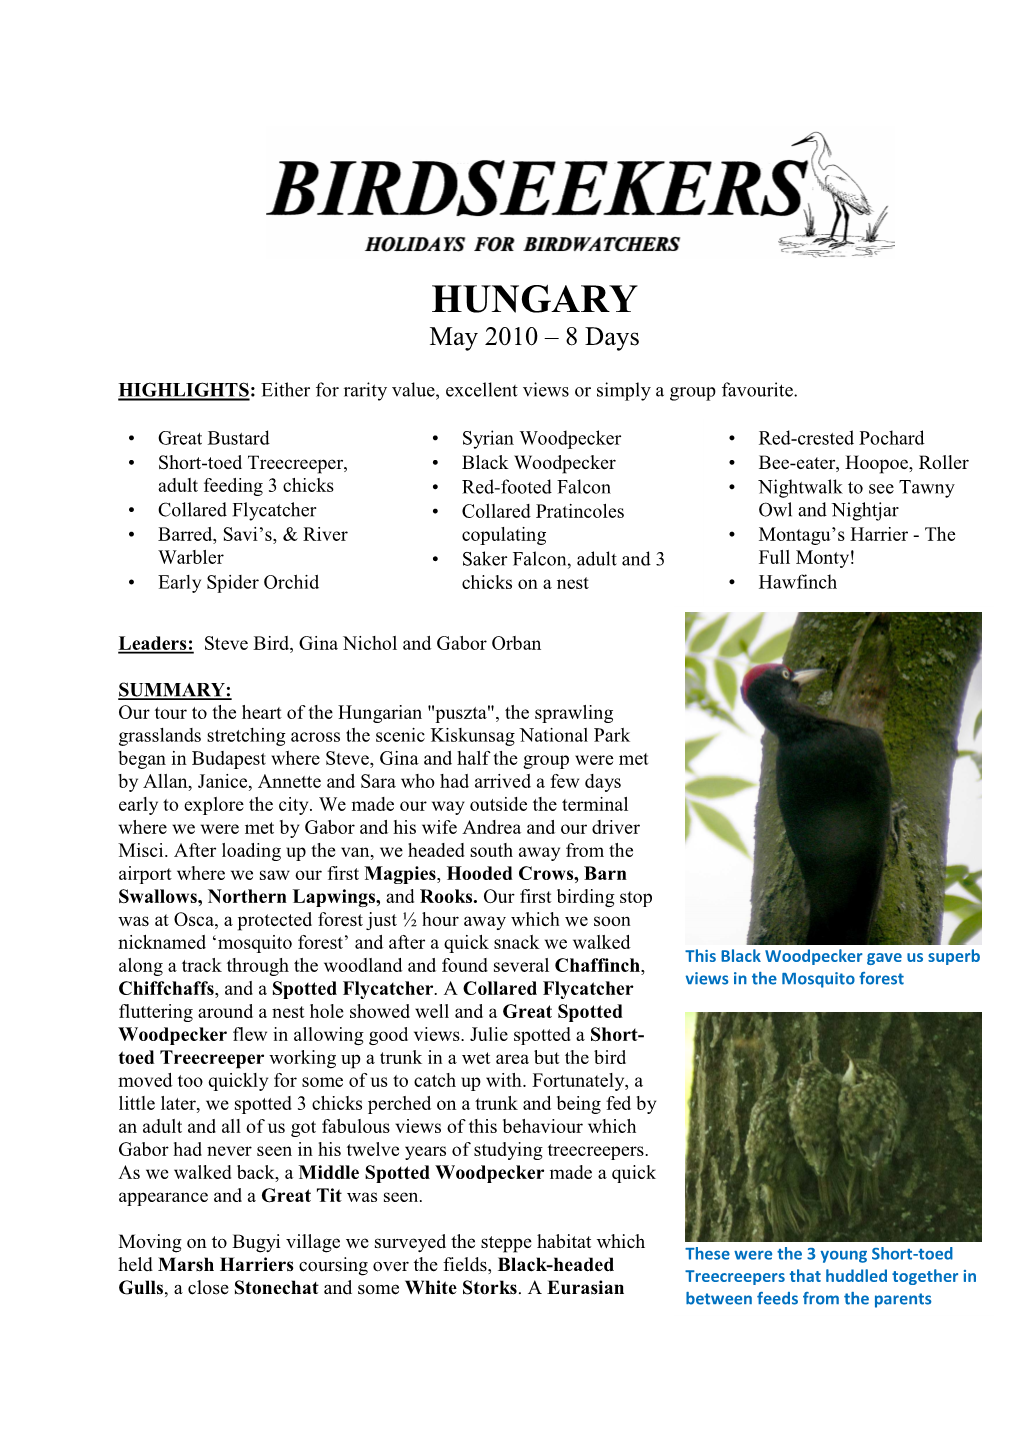 Birdseekers Hungary 2010 Report